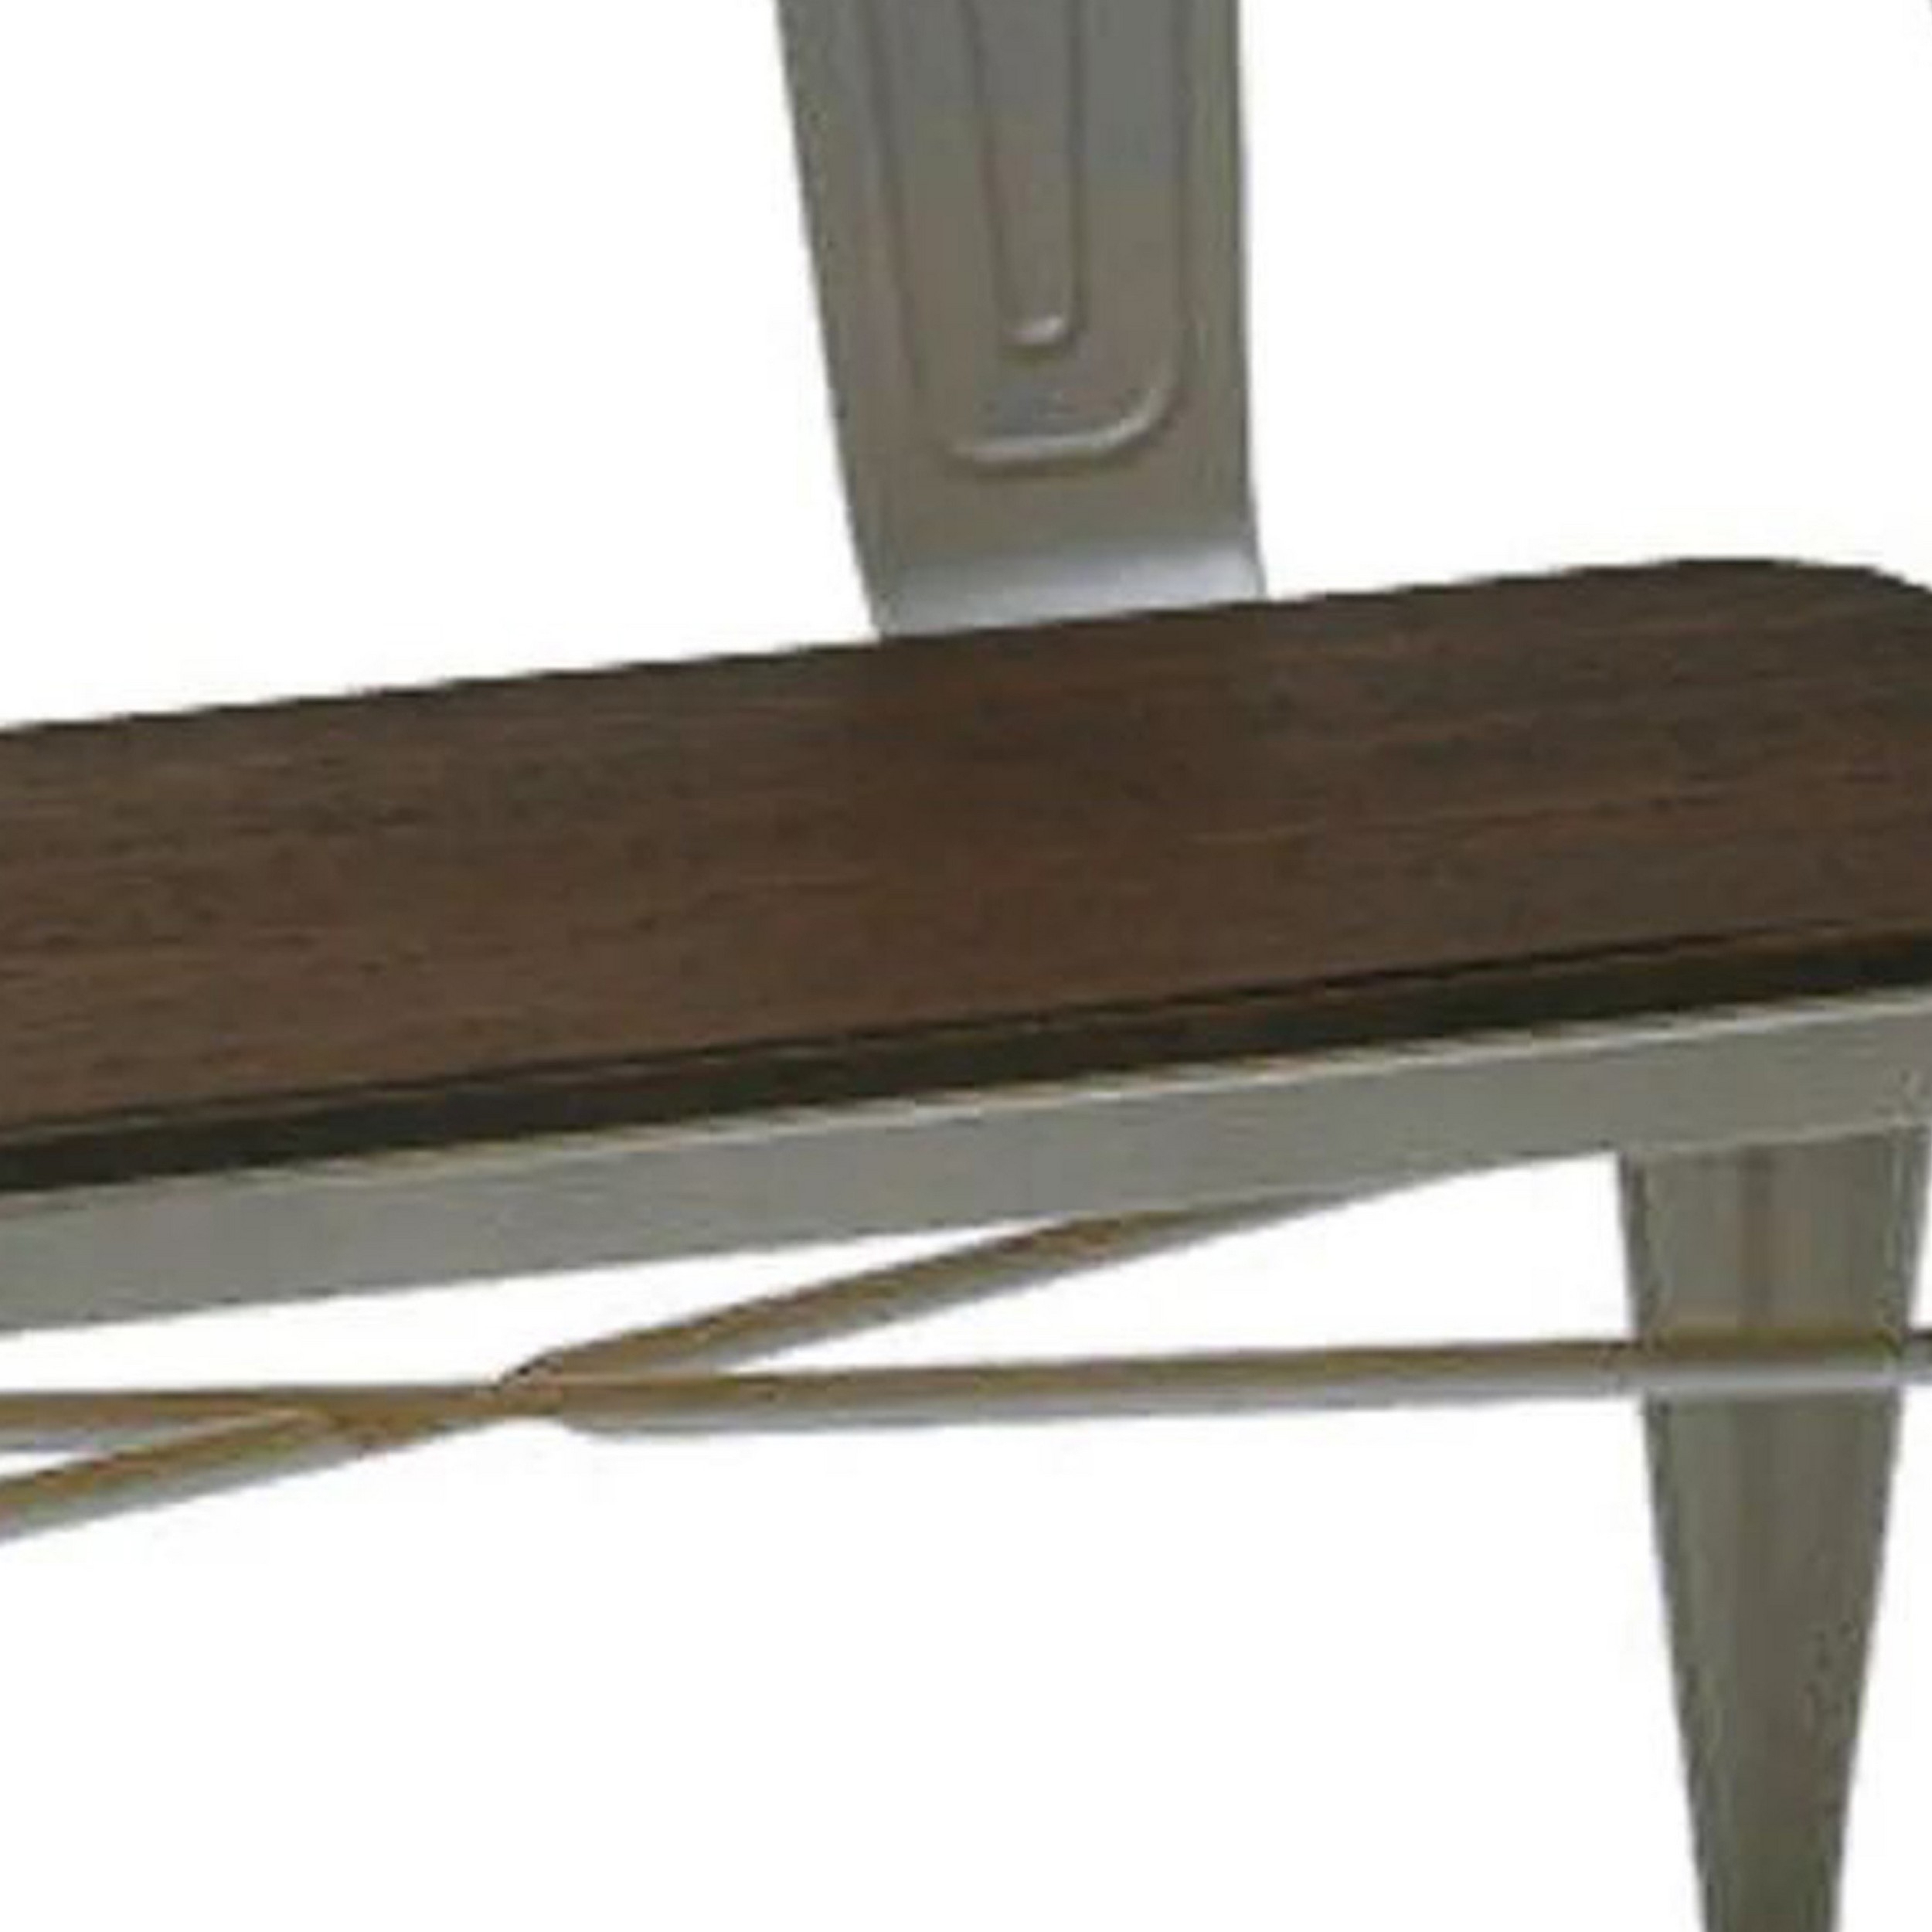 Gina 40 Inch Bench, Smooth Wood Seating, Strong Metal Frame, Natural Gray- Saltoro Sherpi